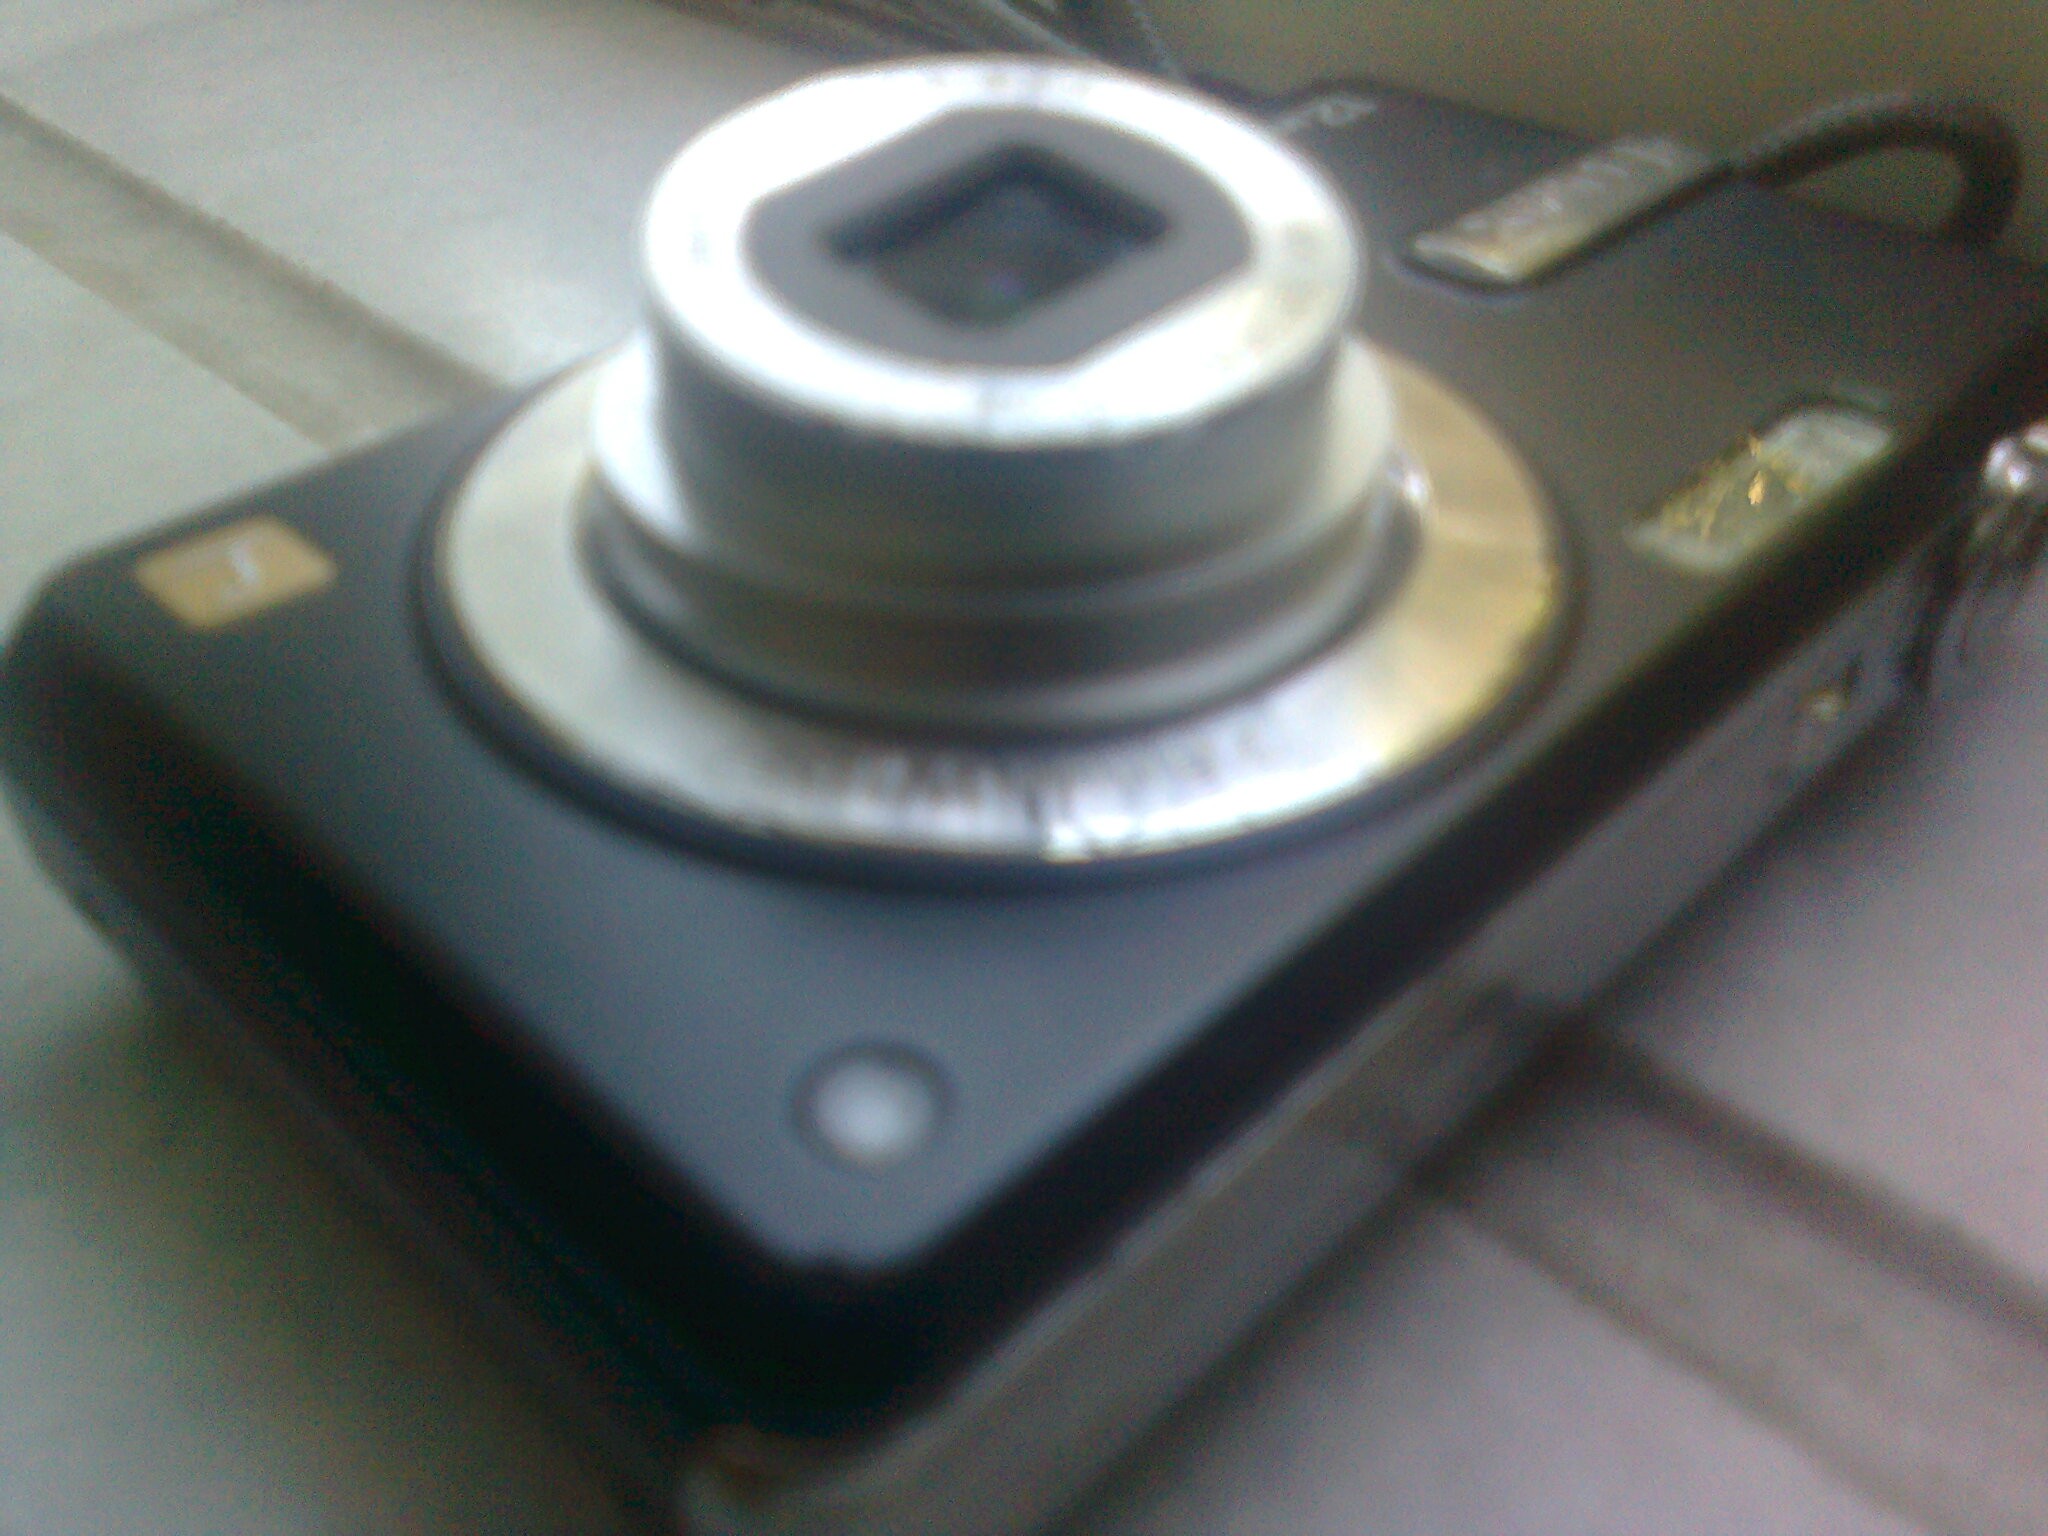  Kompakt Makinemin Lensi Yamuldu